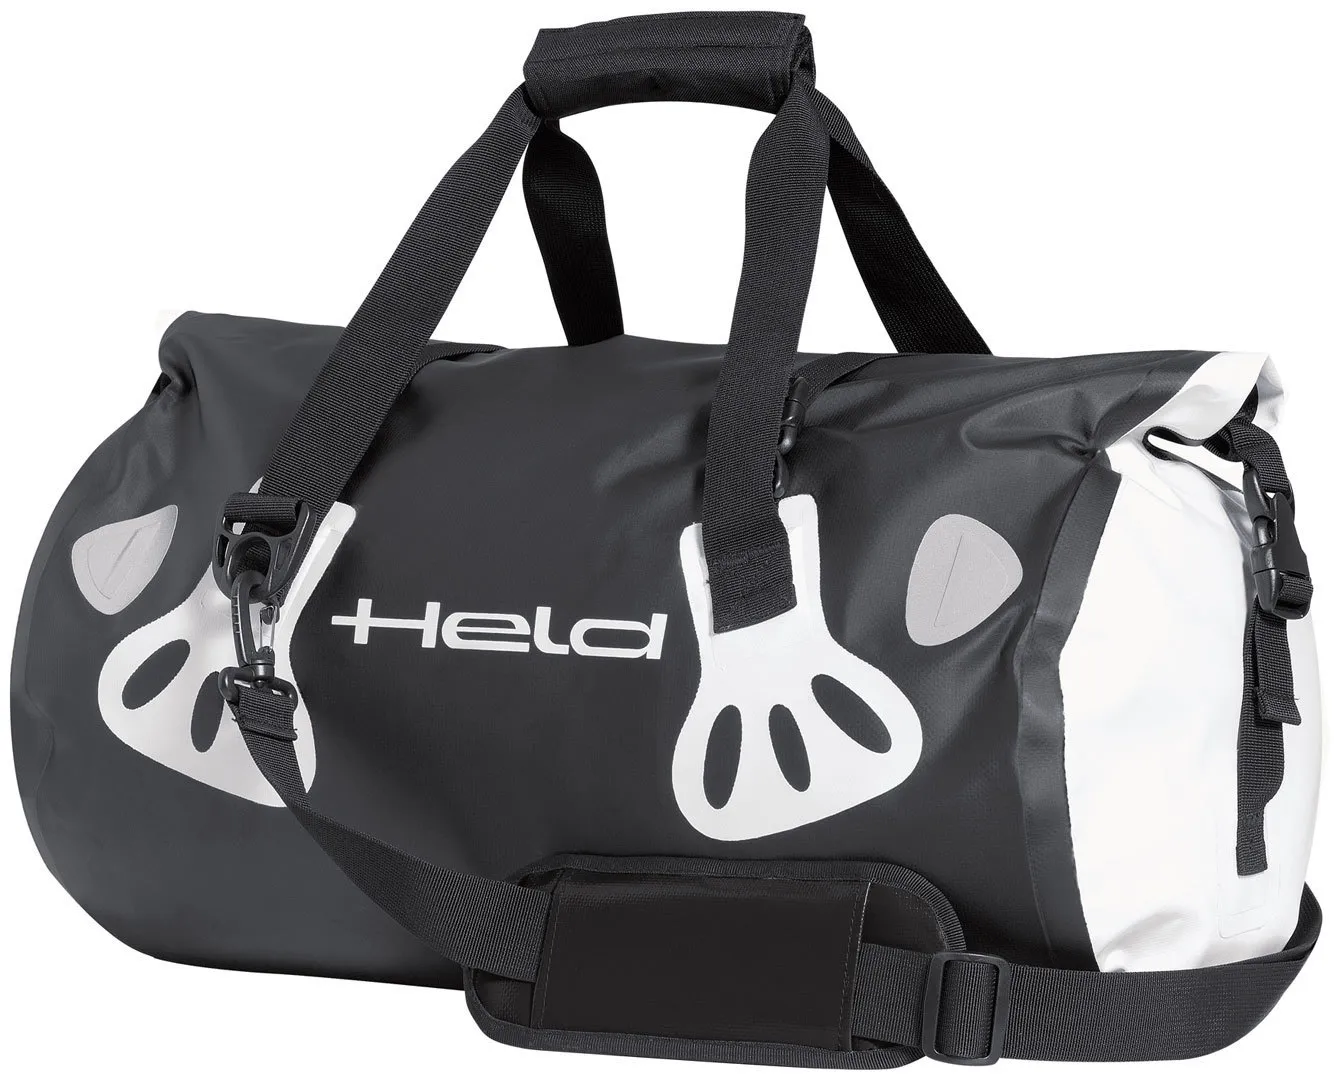 Held Carry-Bag Bagage tas, zwart-wit, 51-60l